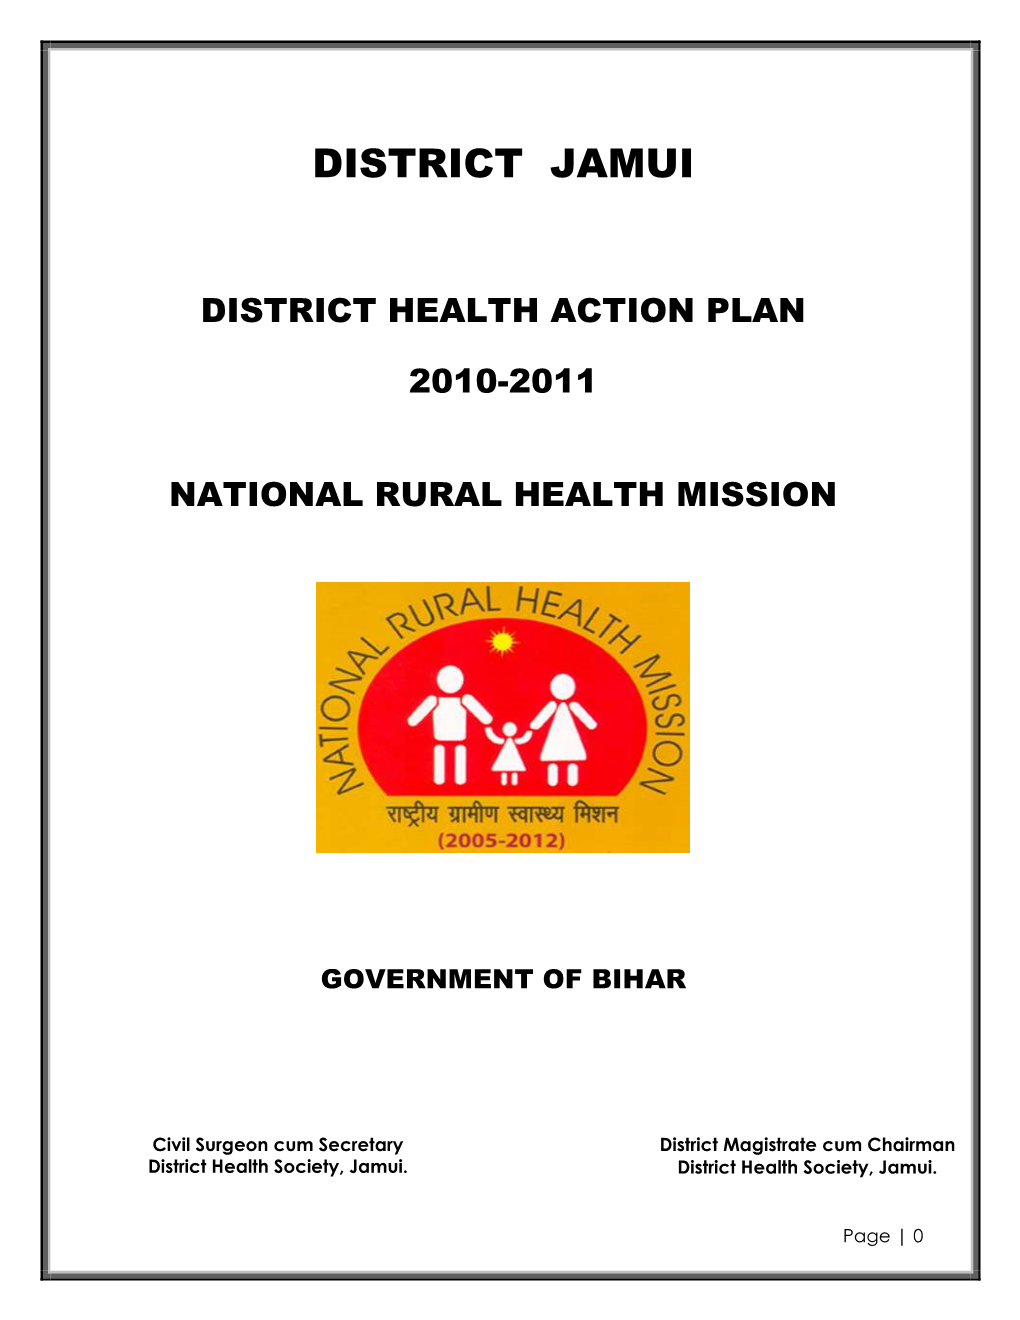 District Jamui